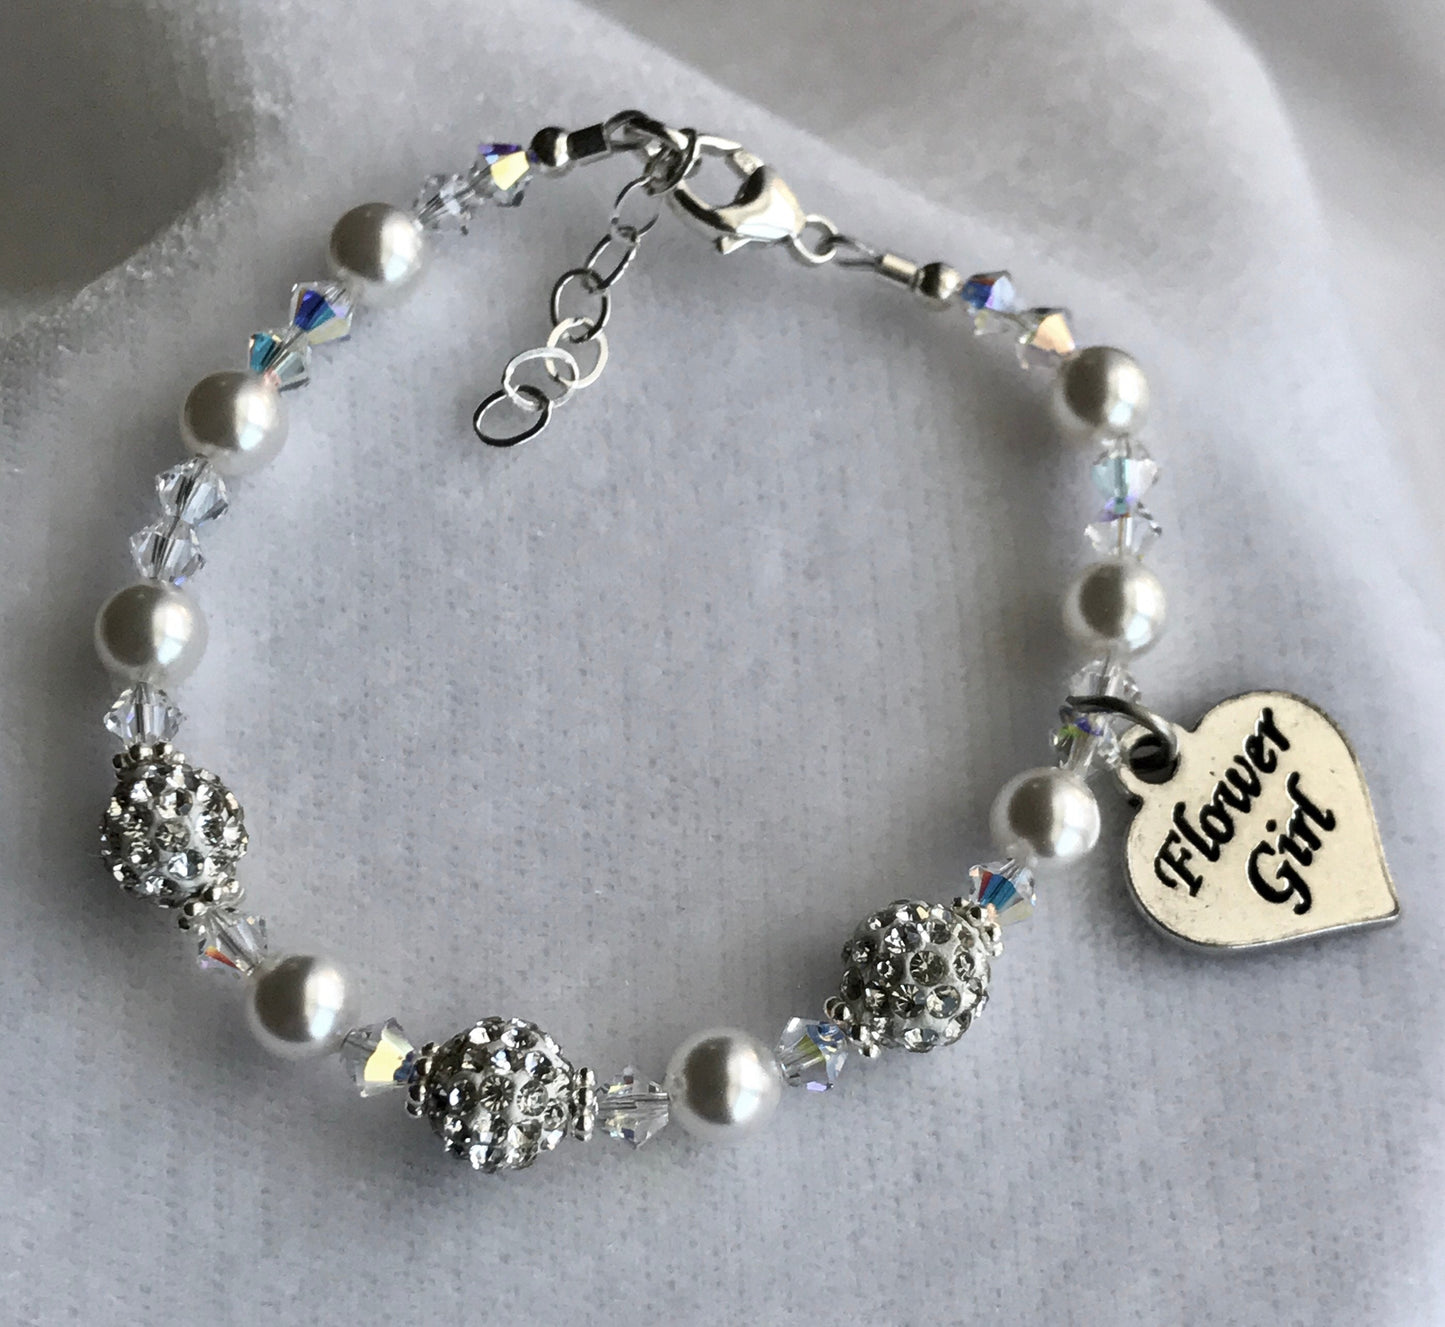 PRESTIGE Pearl Pave Beads Bracelet,Flower Girl Pearl Bracelet,Bridesmaid Pearl Bracelet,Junior Bridesmaid Bracelet,Pave Crystal Bracelet